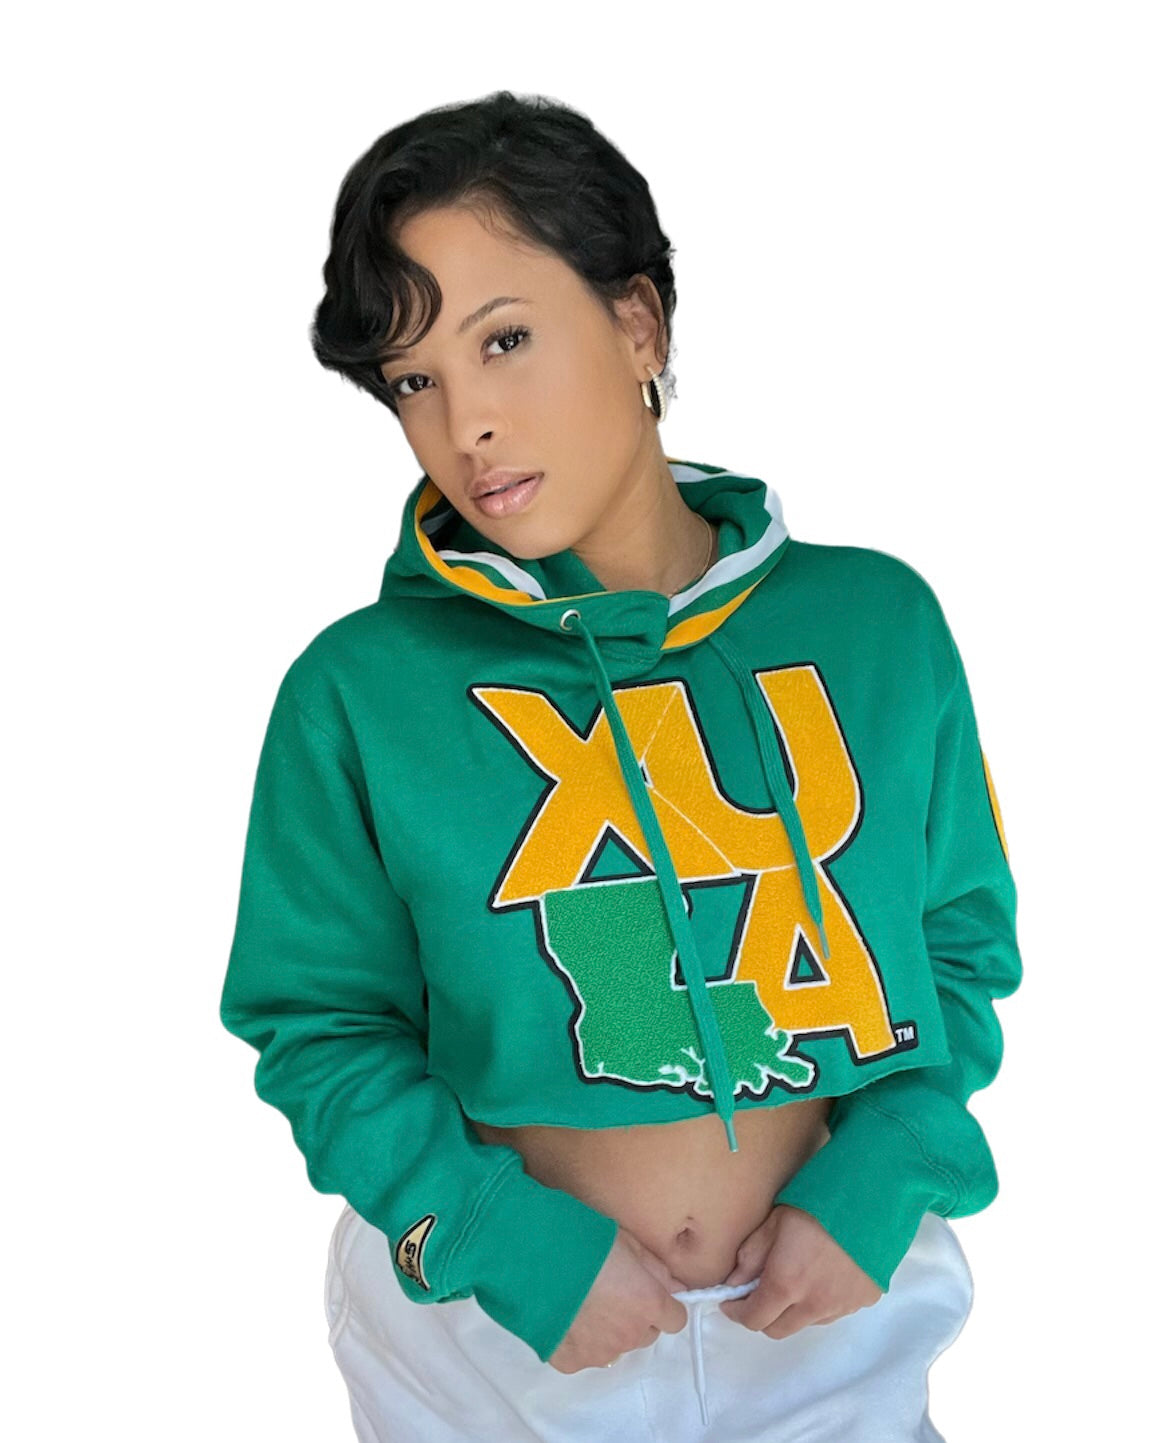 Xavier University of Louisiana Letterman Sweater – The Talented 10th